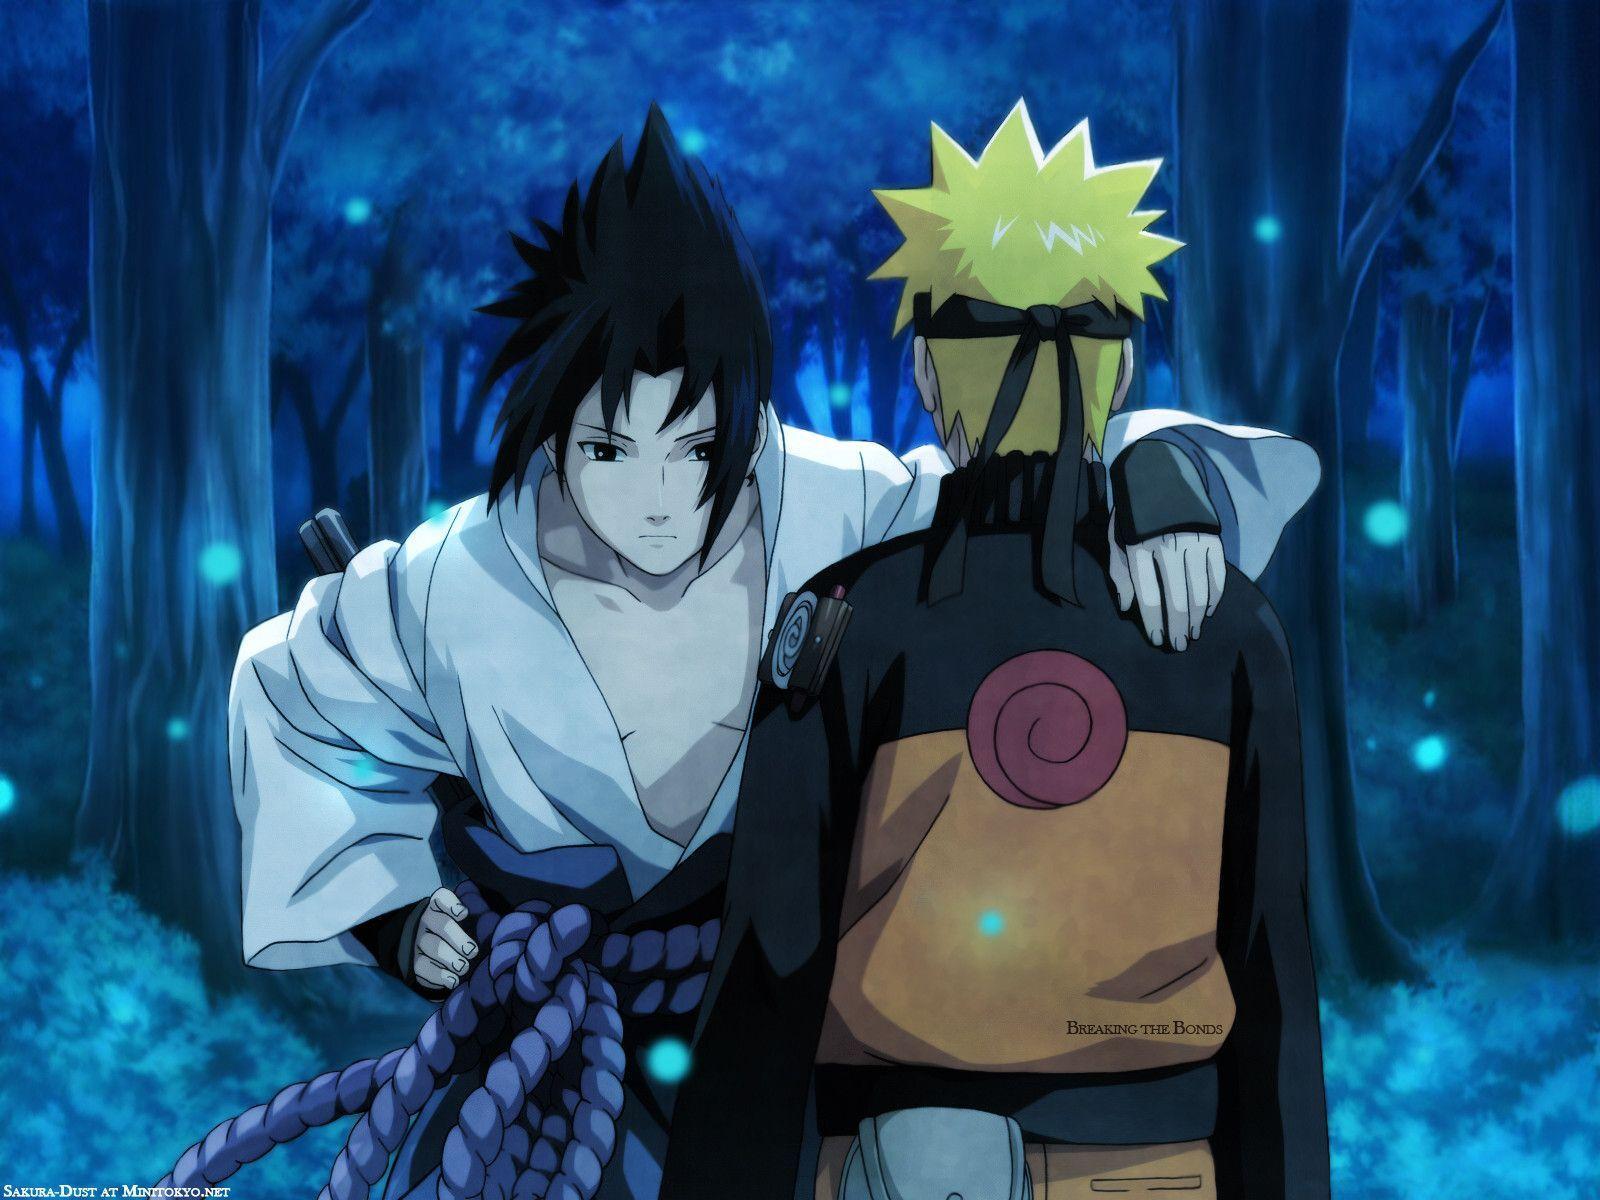 Naruto and Sasuke shippuden Wallpaper. HD Wallpaper, background